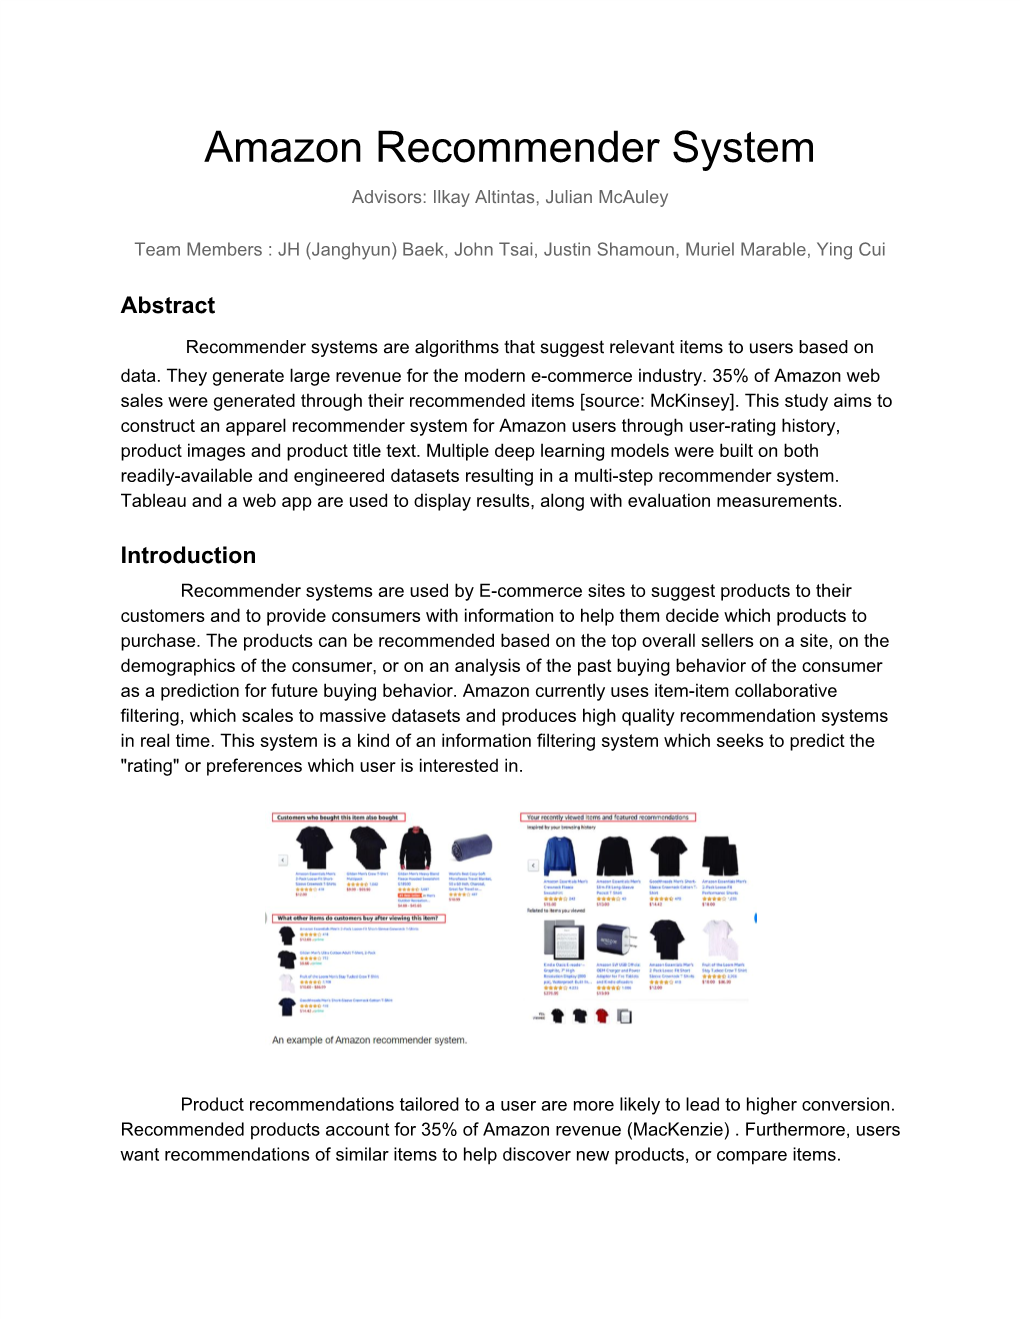 Amazon Recommender System Advisors: Ilkay Altintas, Julian Mcauley